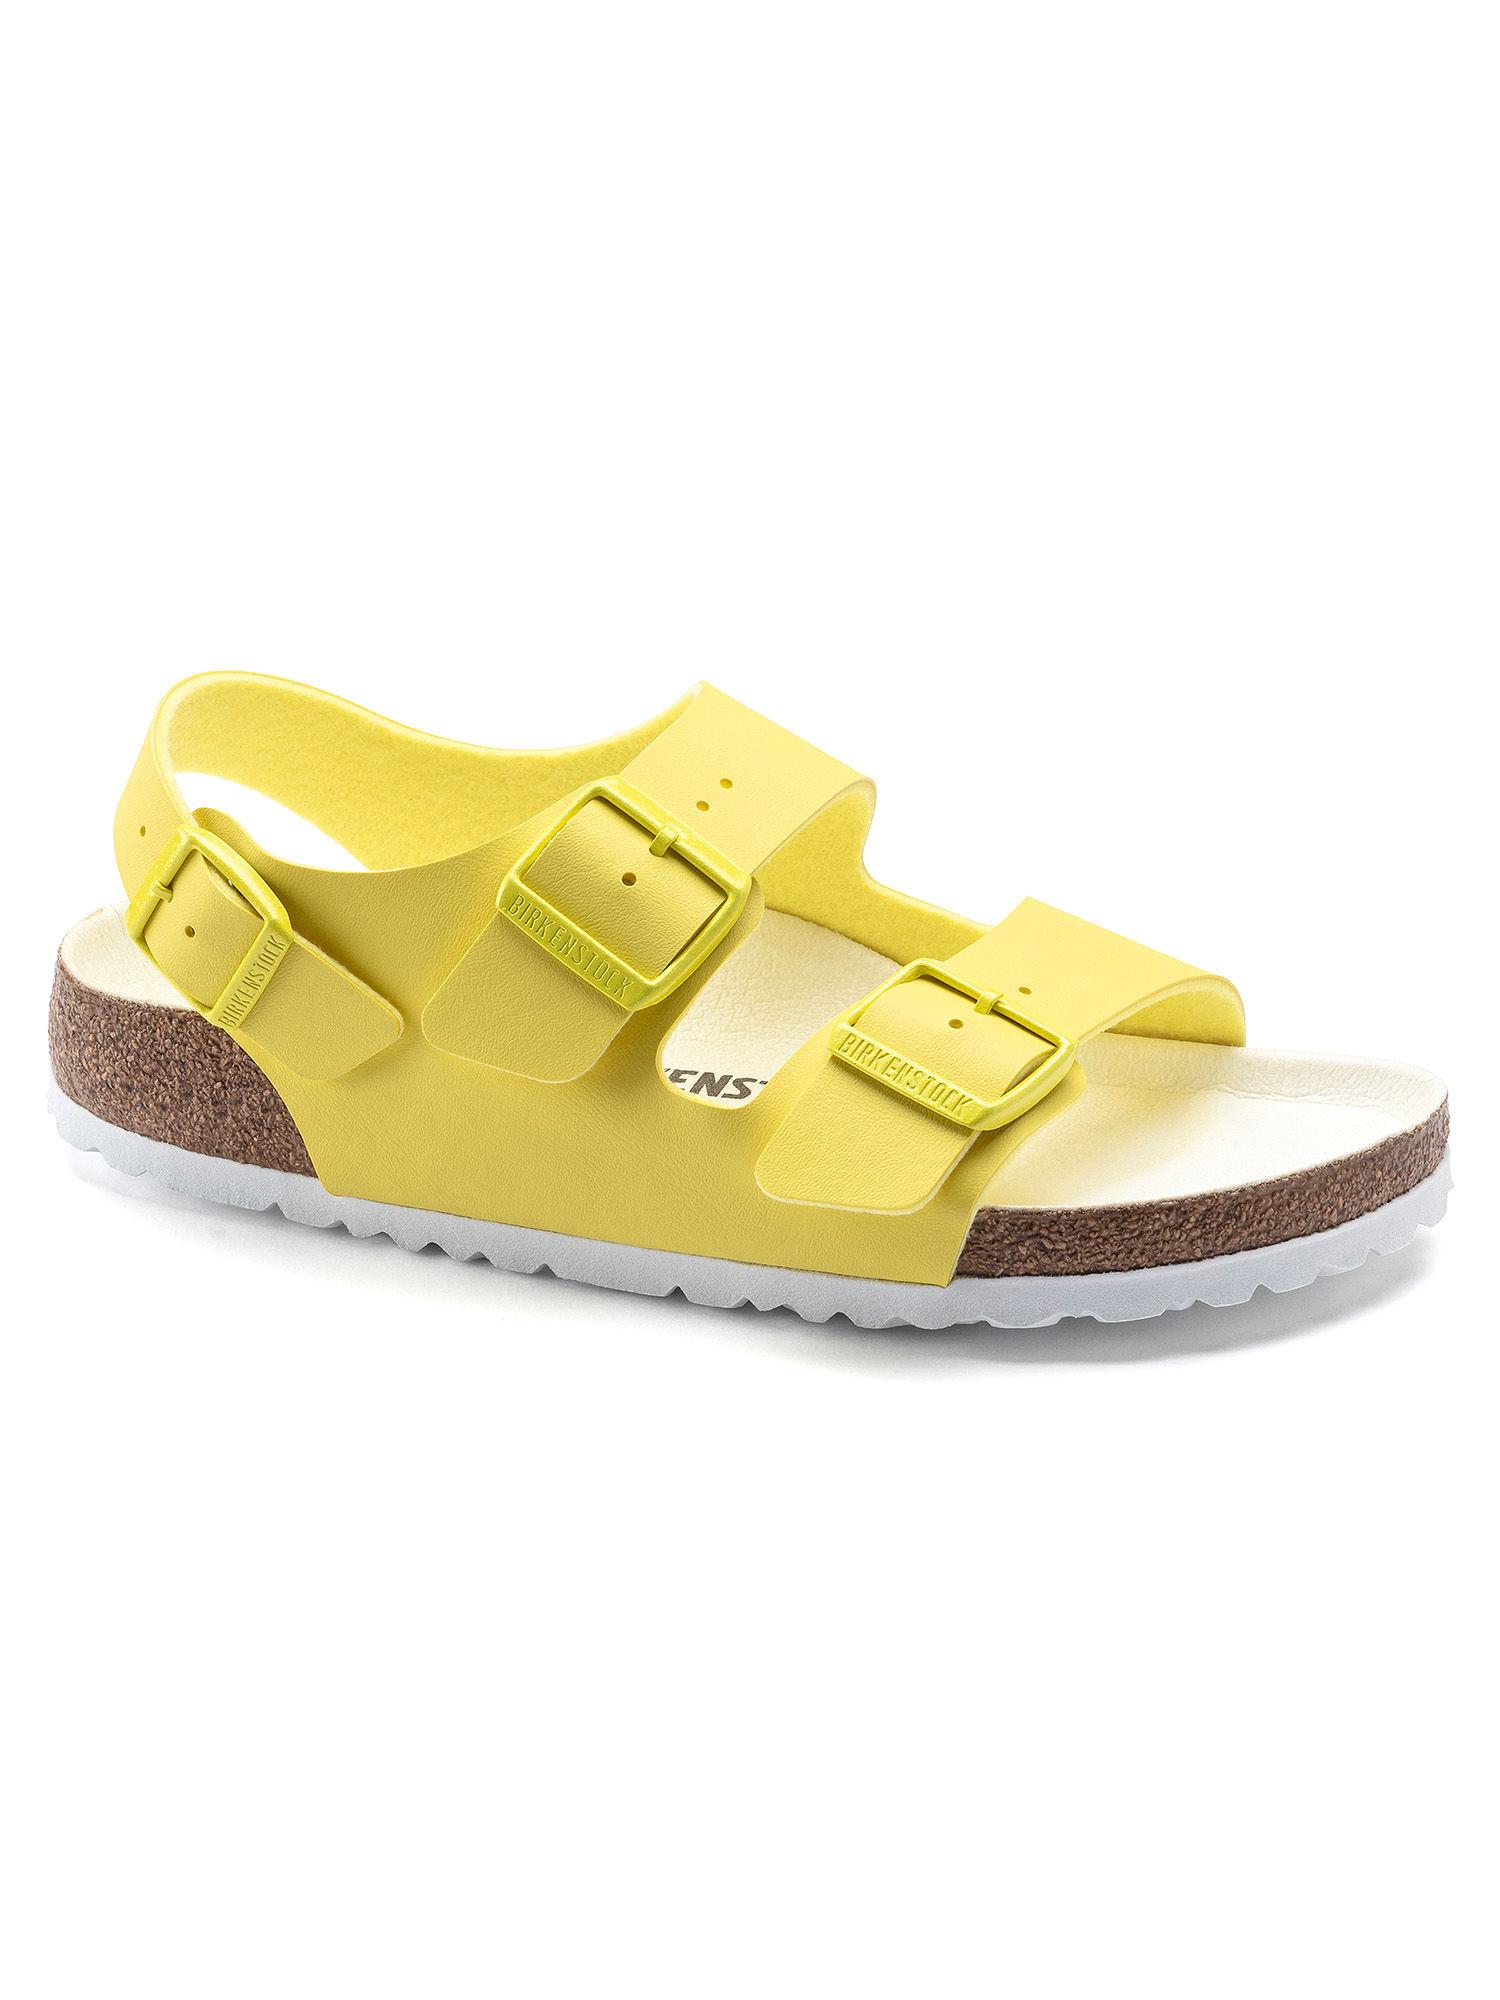 milano-yellow-regular-width-unisex-ankle-strap-sandals